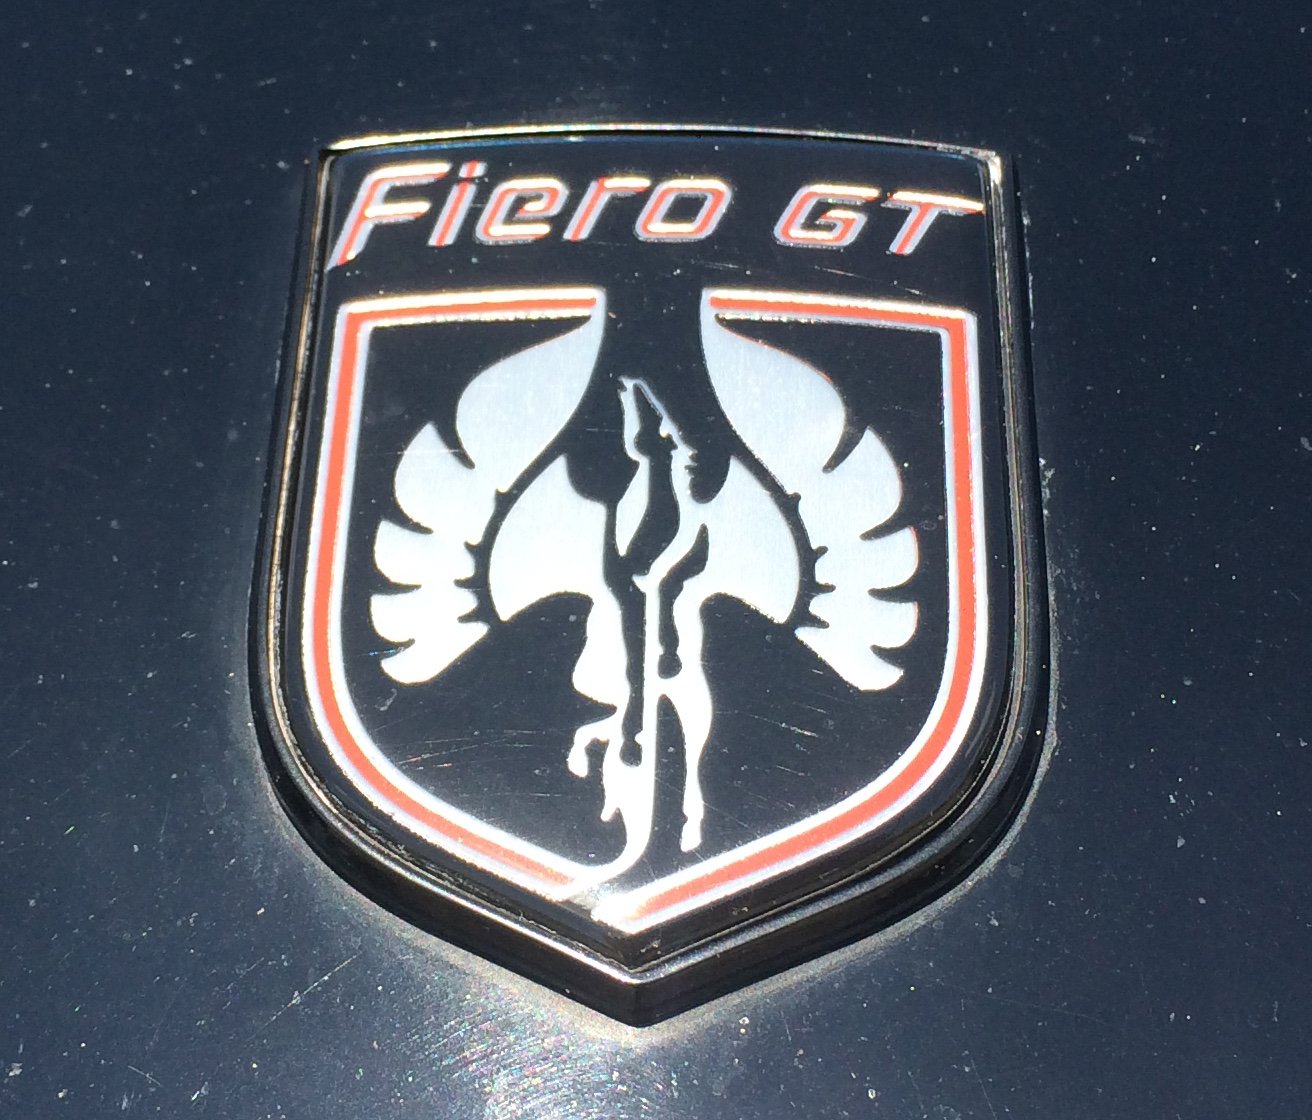 Lot Shots Find of the Week: 1985 Pontiac Fiero GT - OnAllCylinders1312 x 1120